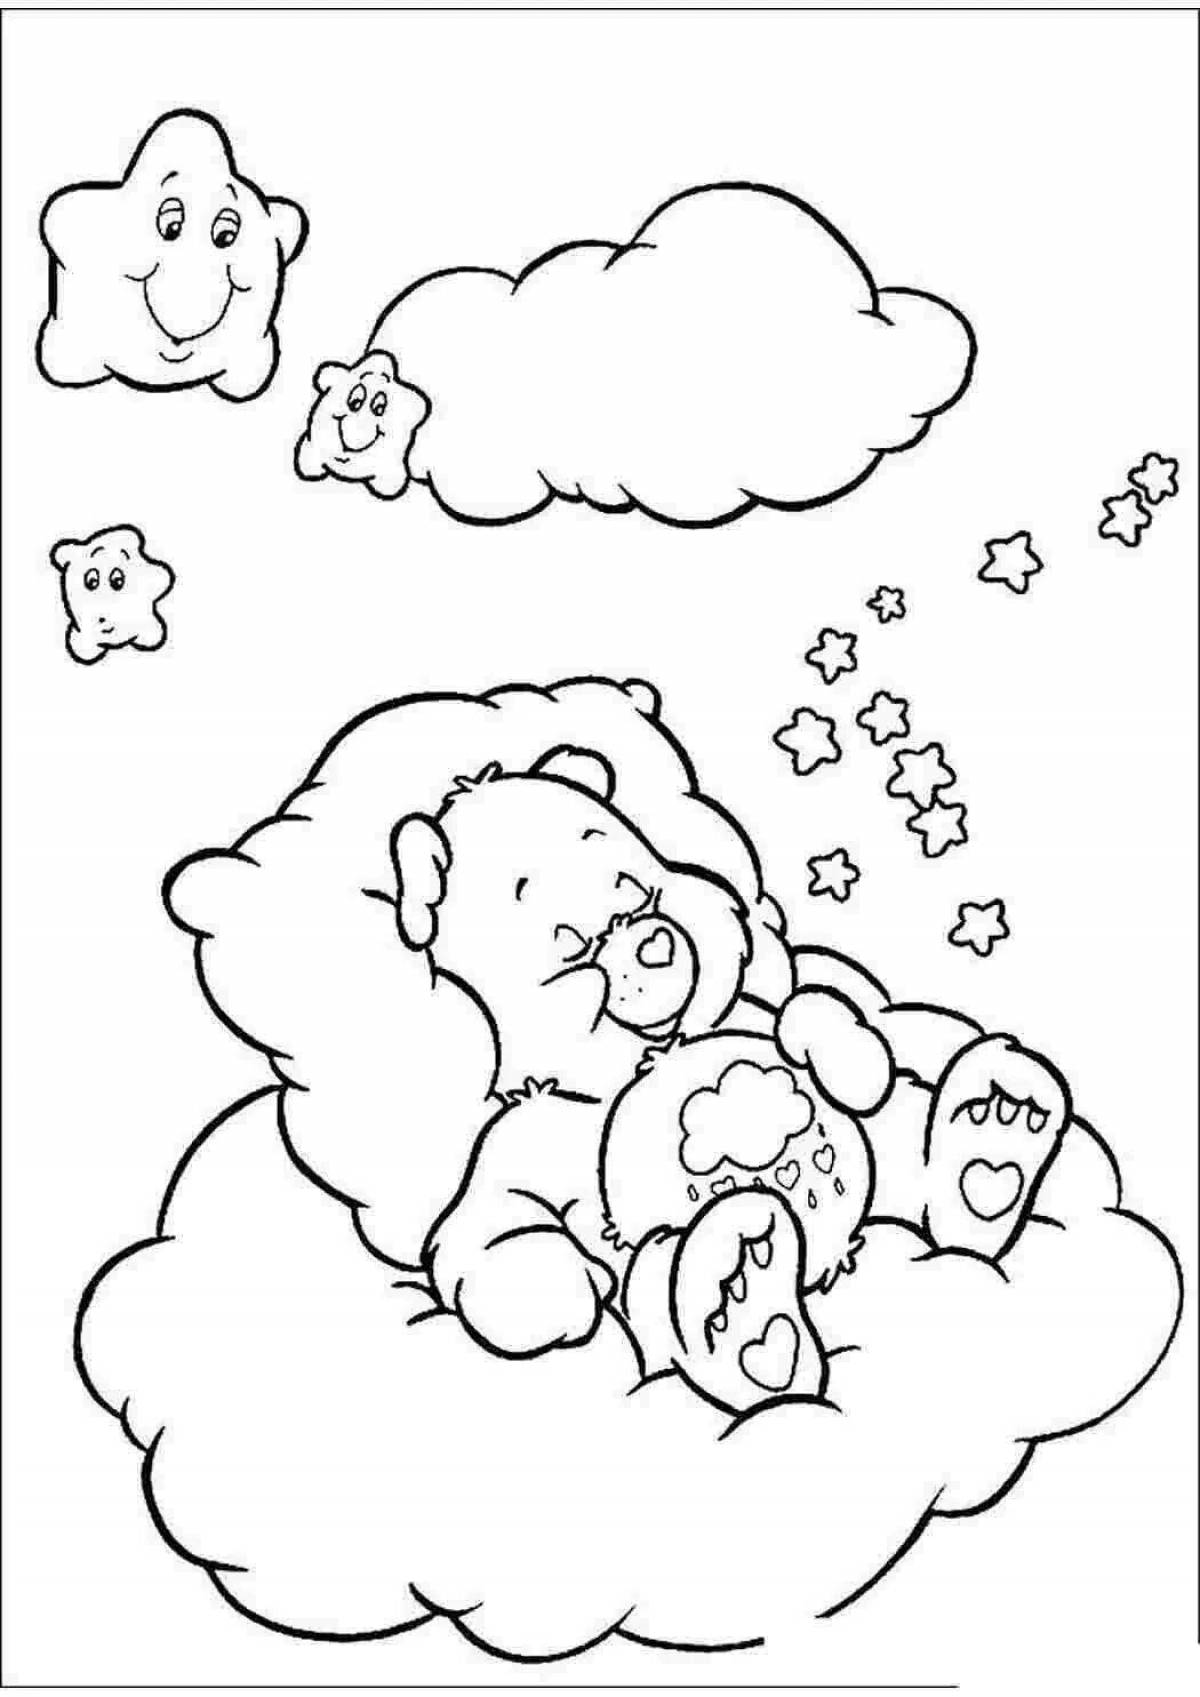 Coloring book peaceful teddy bear sleeping